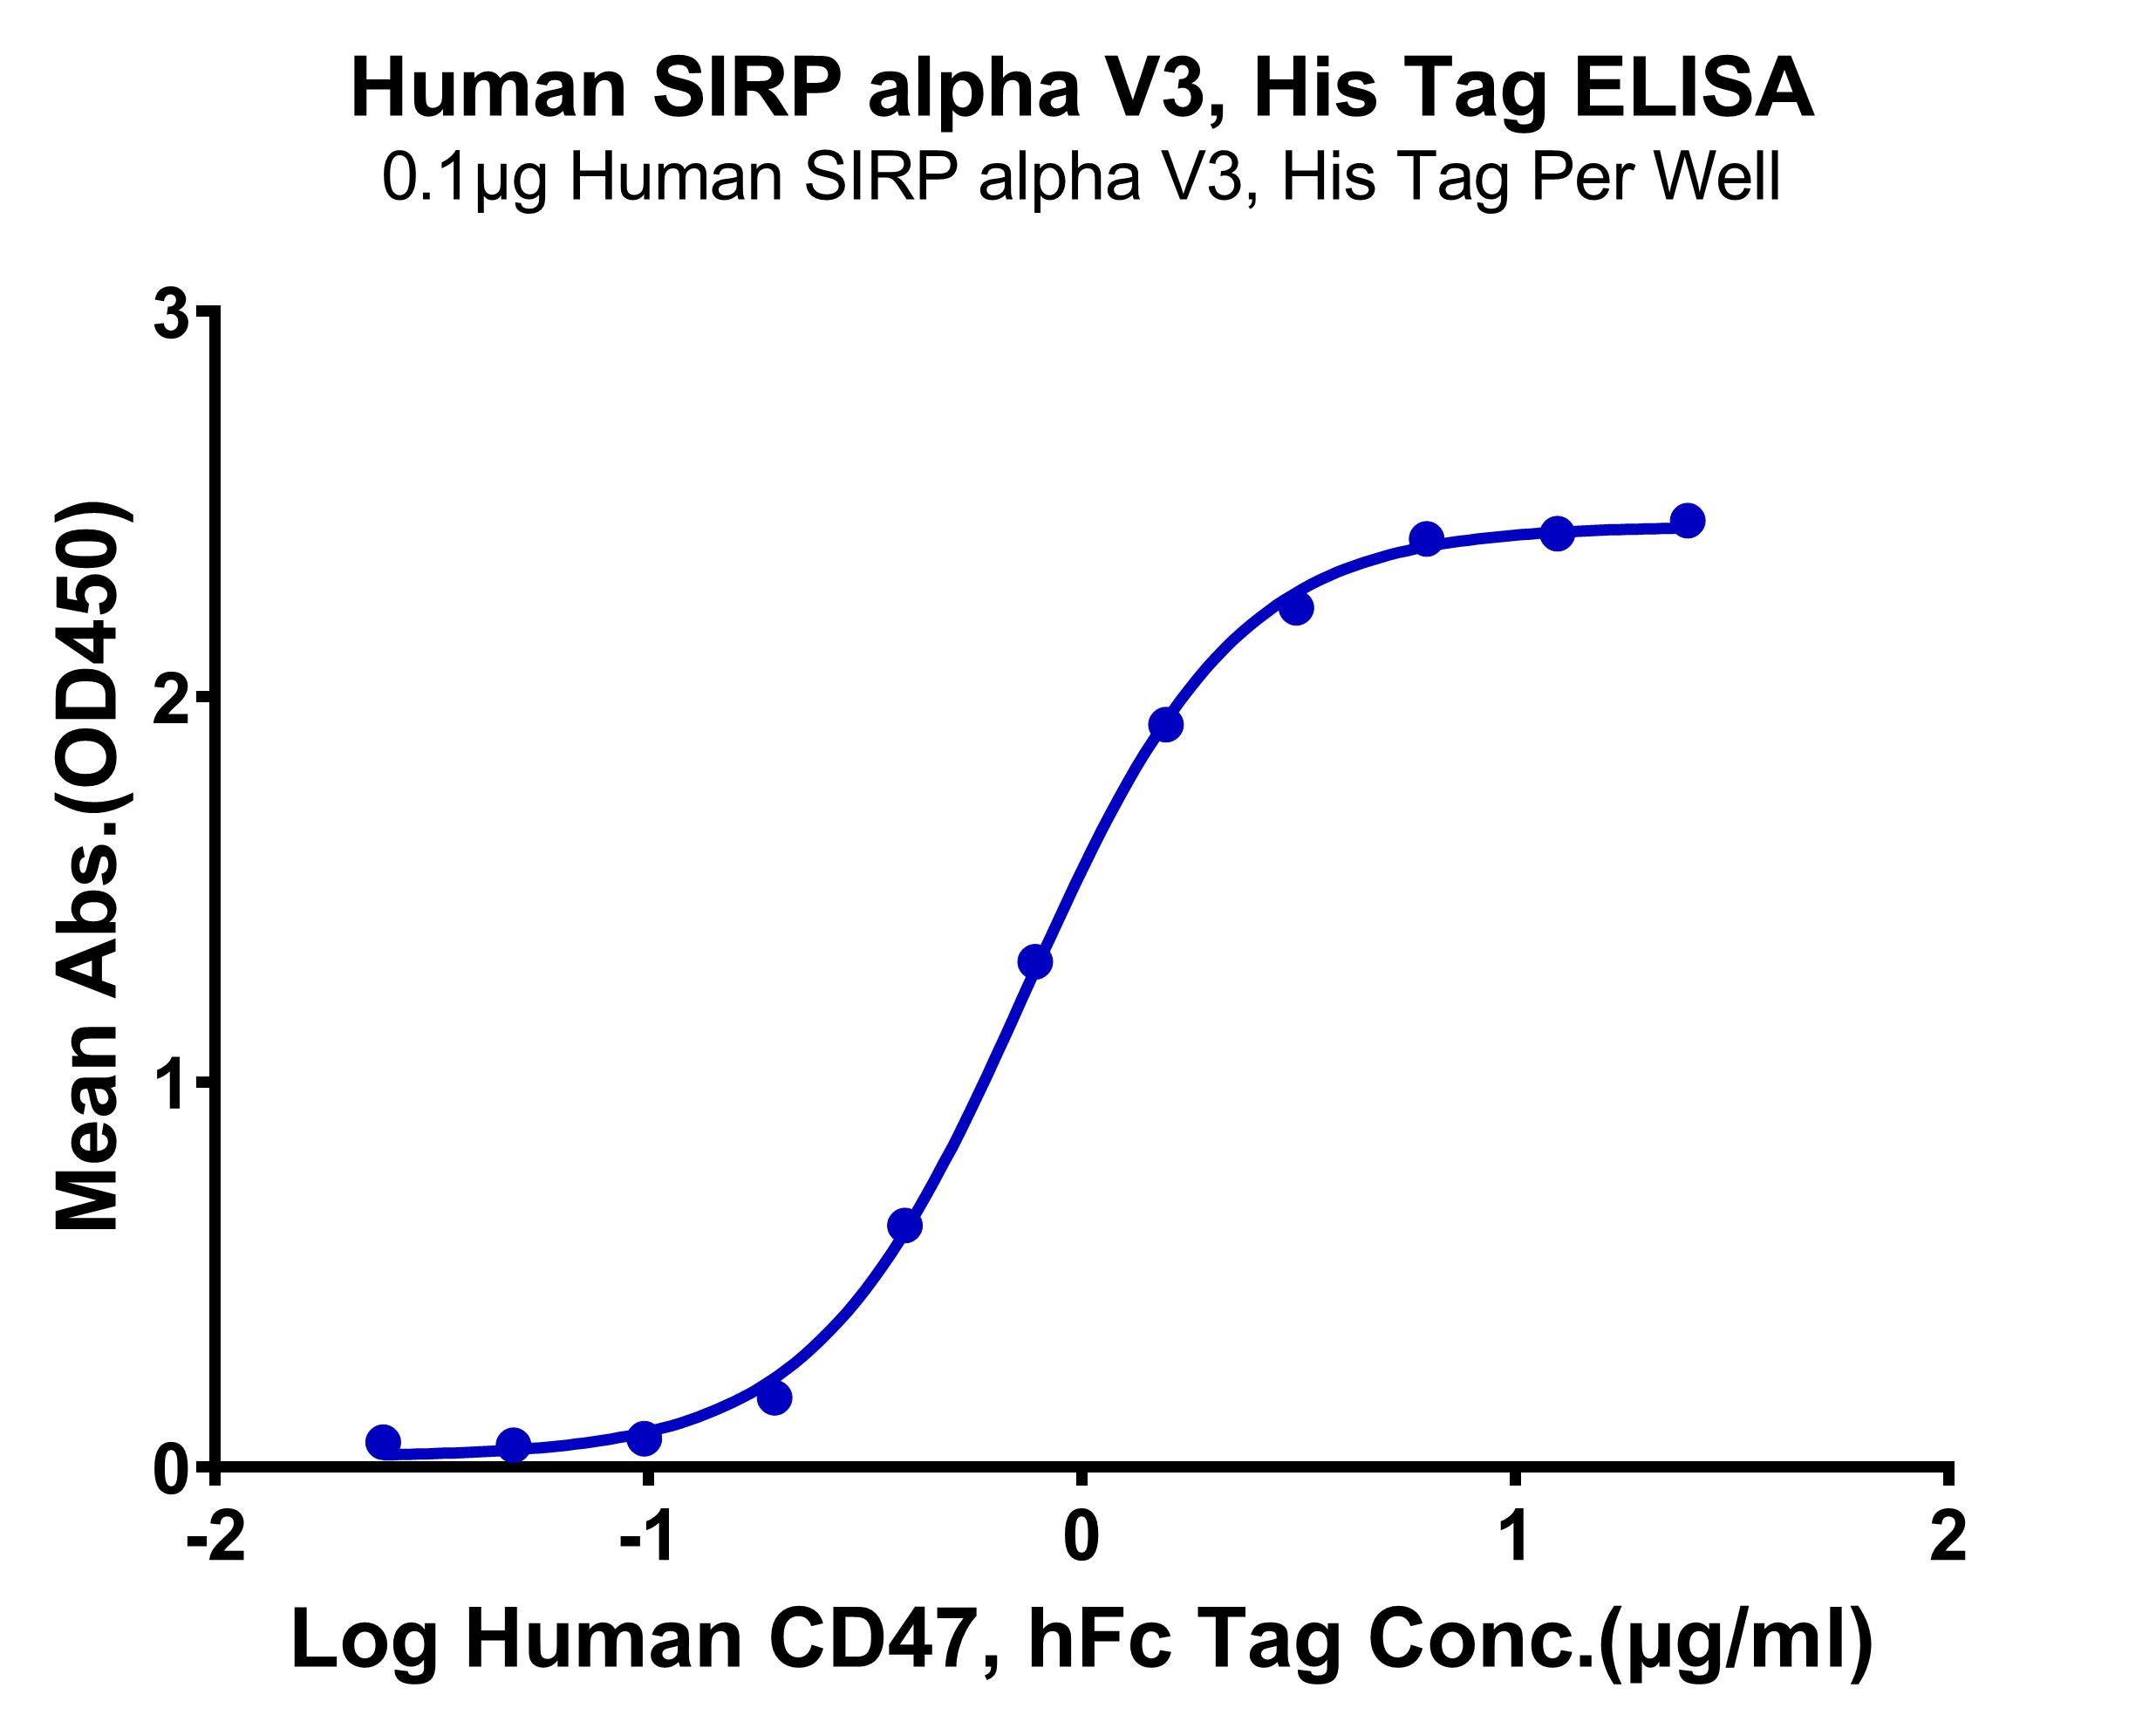 Human SIRP alpha V3 Protein (LTP10507)